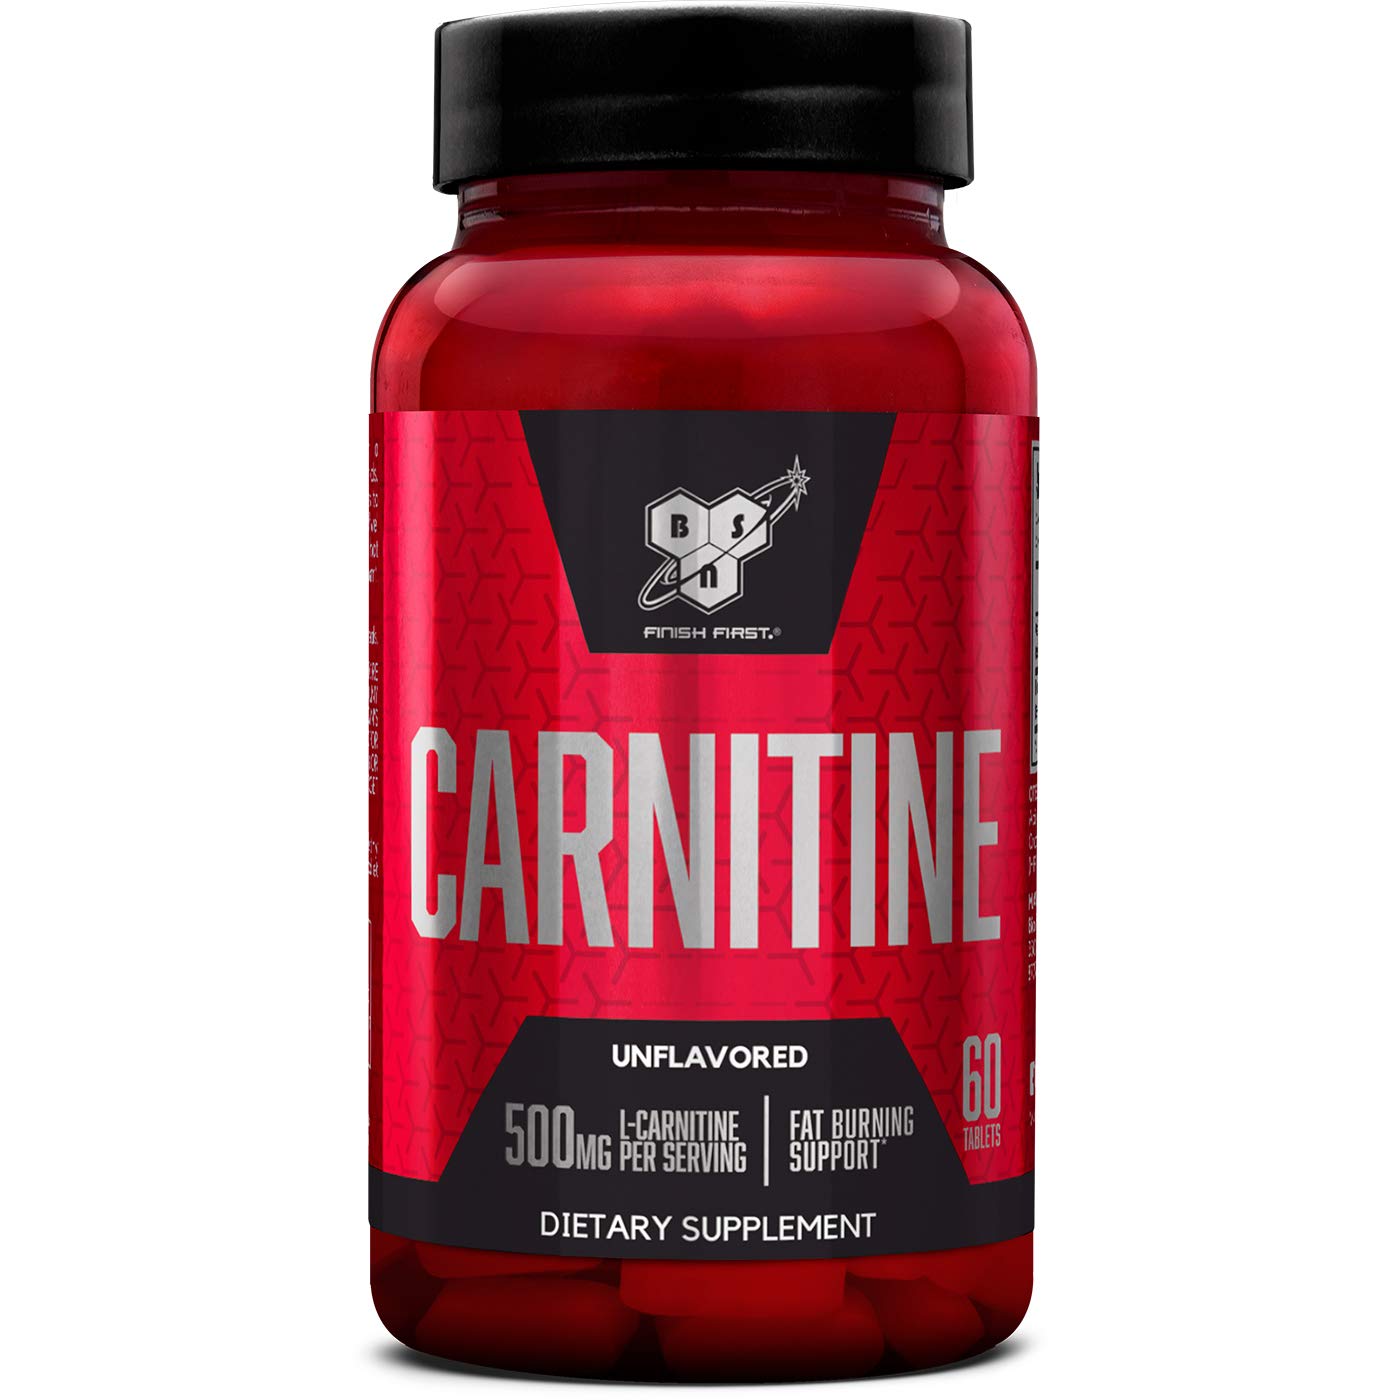 Л карнитин купить в аптеке. BSN L-Carnitine. BSN Carnitine 500 MG L-карнитин 60 табл.. Optimum Nutrition l-Carnitine л-карнитин 500 мг. 60 Табл.. Carnitine 500mg 60.